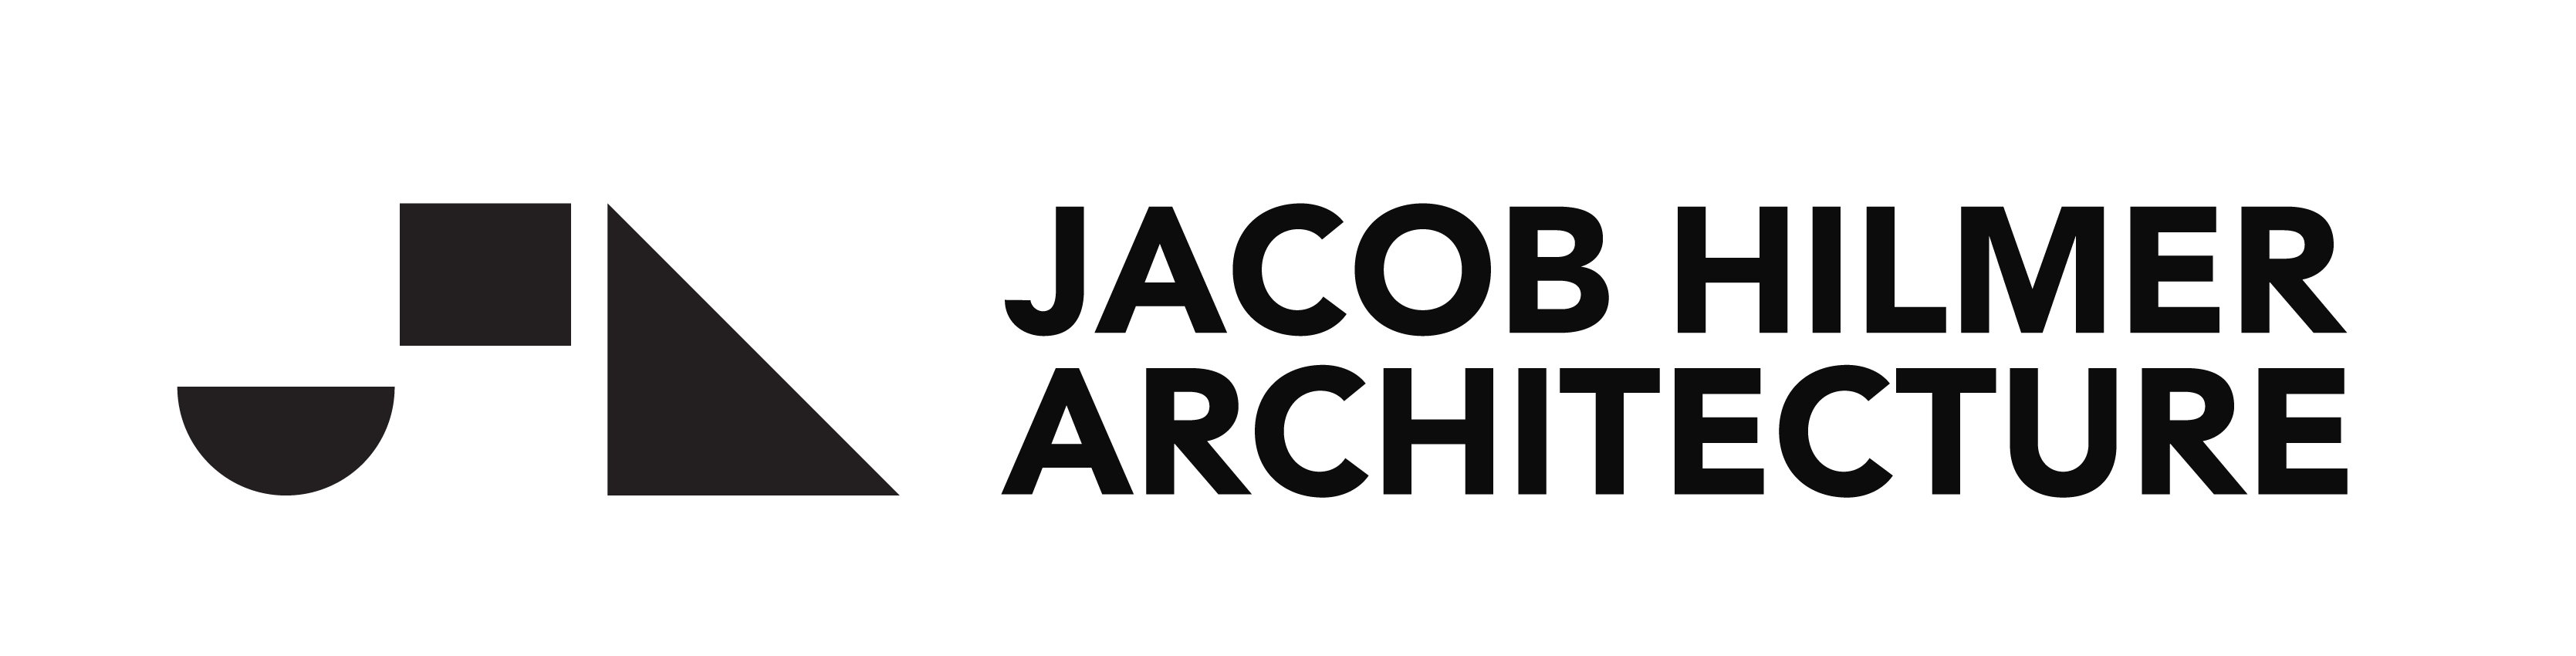 Jacob Hilmer Architecture logo